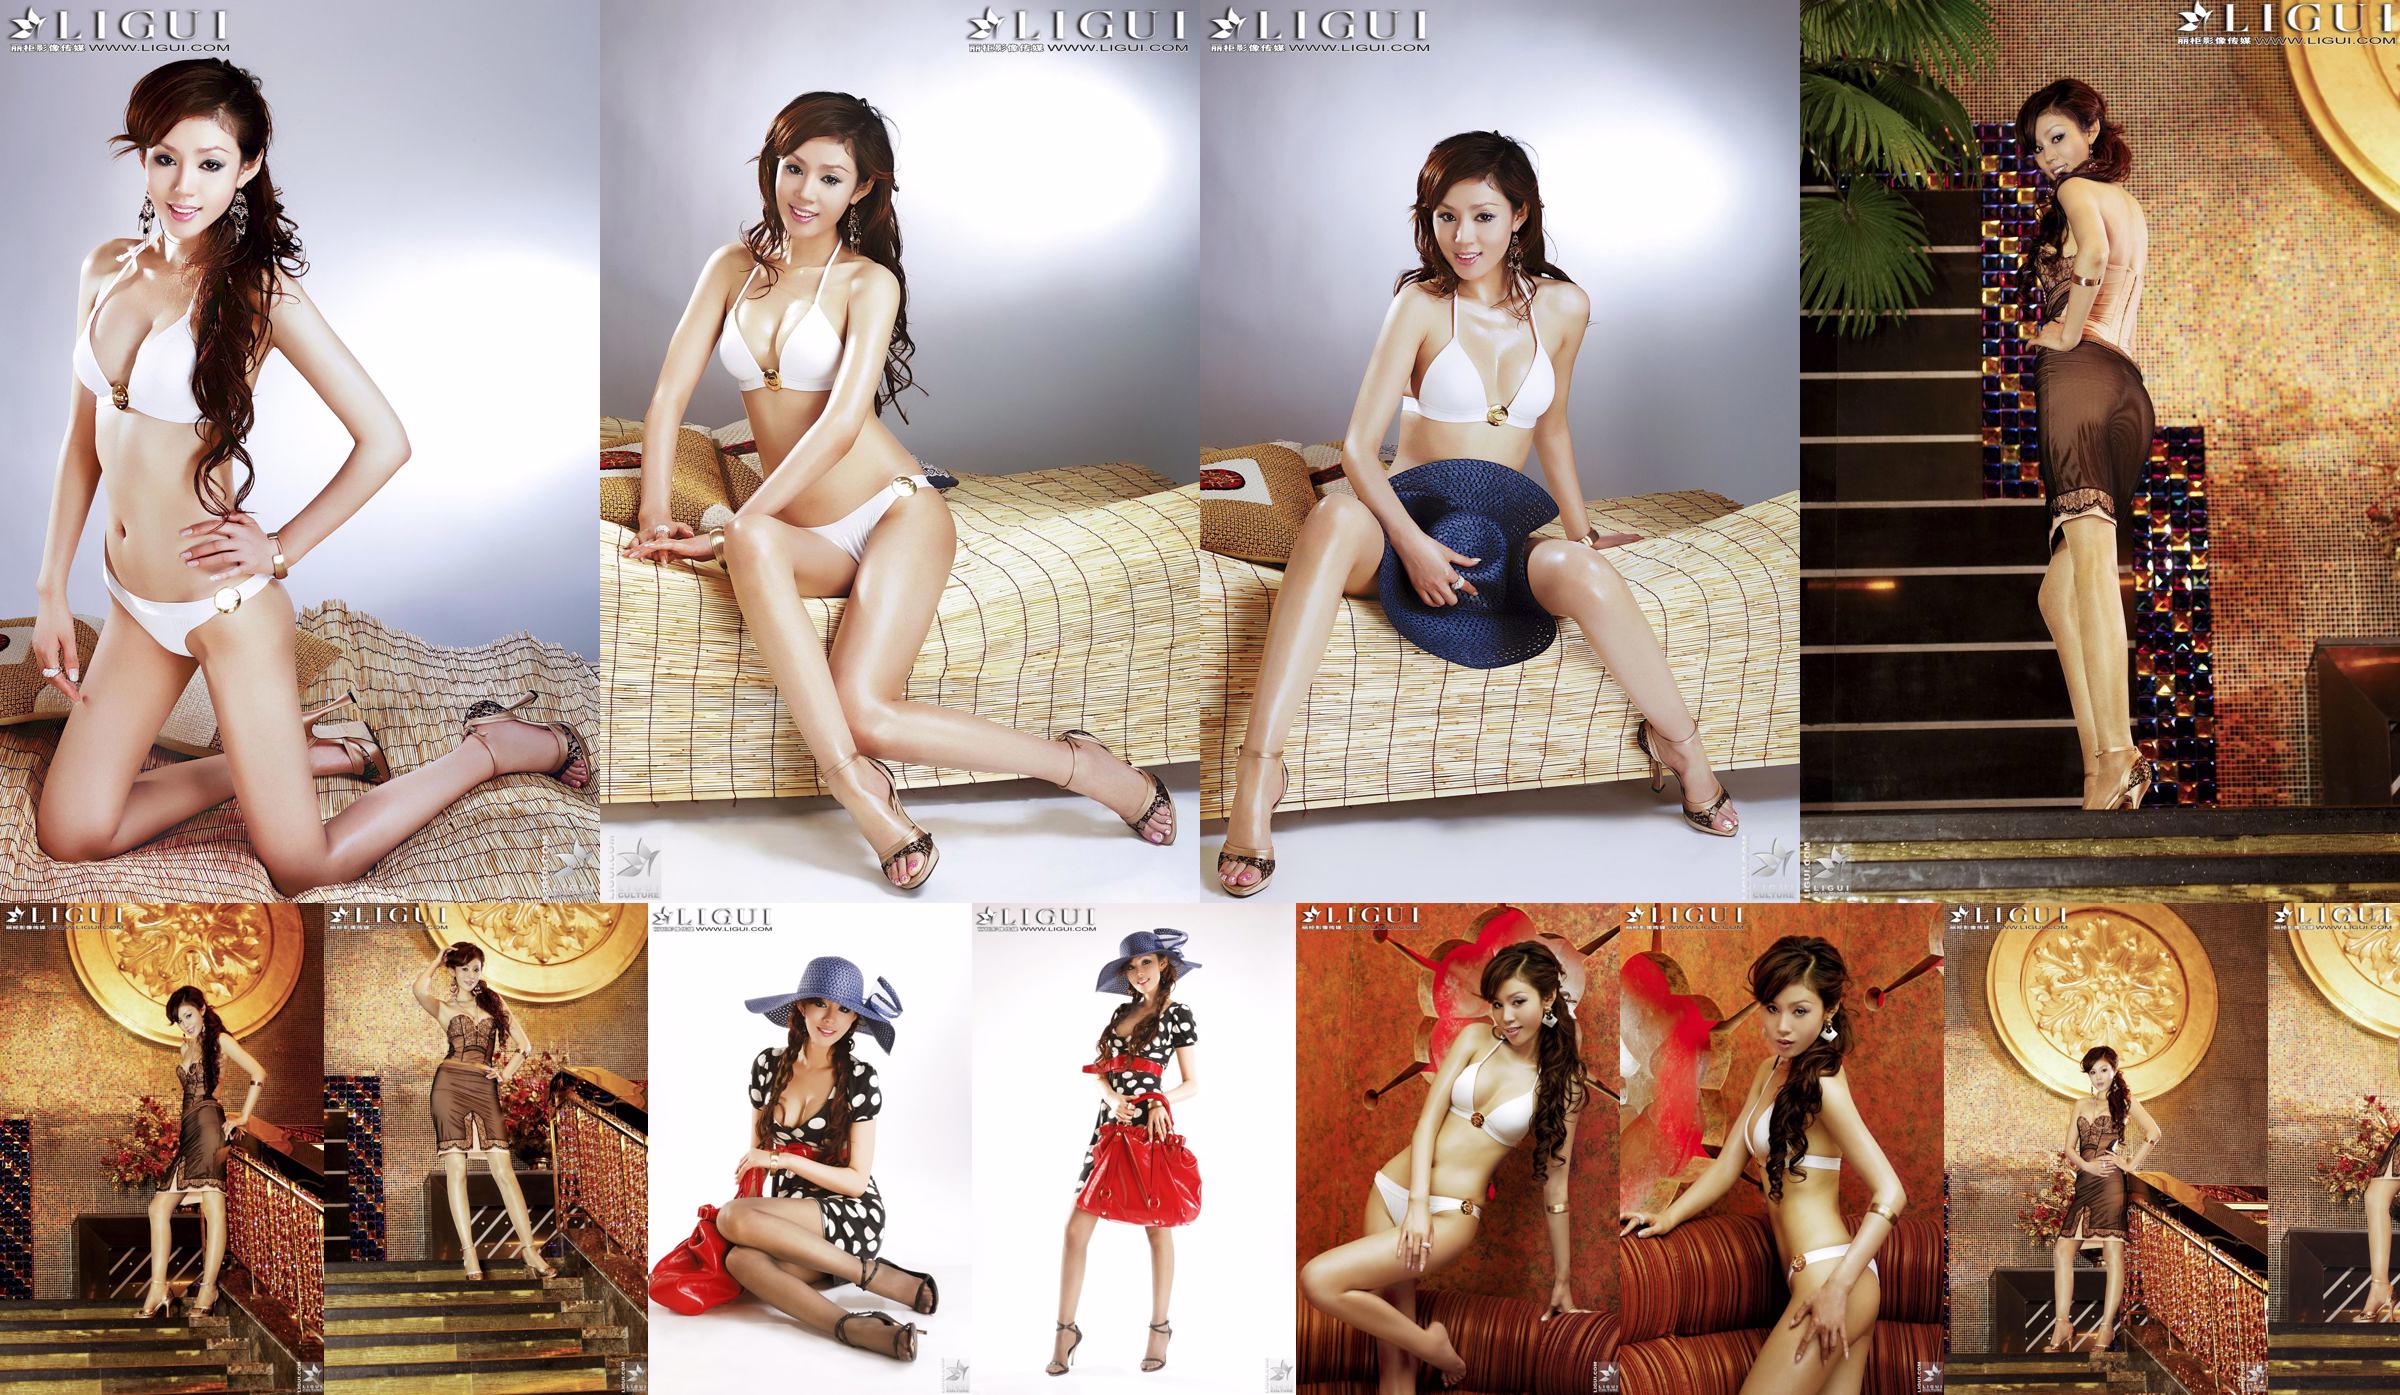 [丽 柜 LiGui] Model Yao Jinjin's "Bikini + Jurk" Mooie benen en zijdeachtige voeten Foto Foto No.17d8d9 Pagina 14